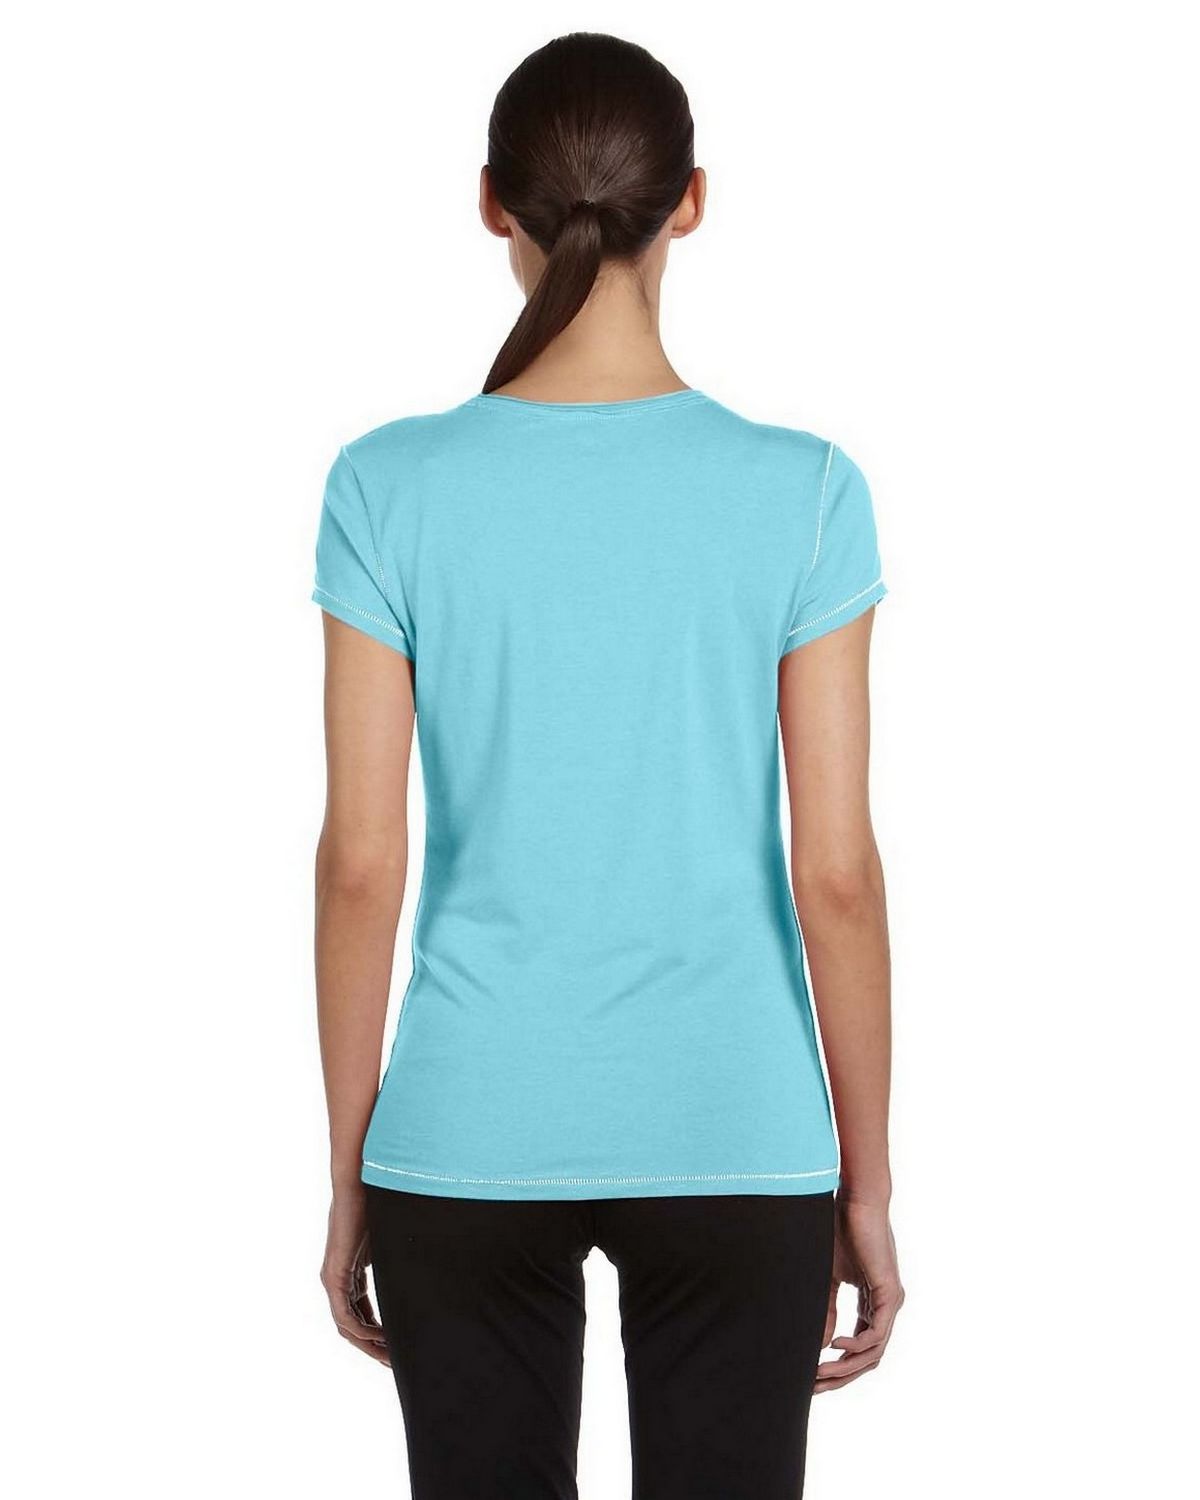 All Sport W1004 Ladies’ Short-Sleeve Bamboo T-Shirt - Apparelnbags.com